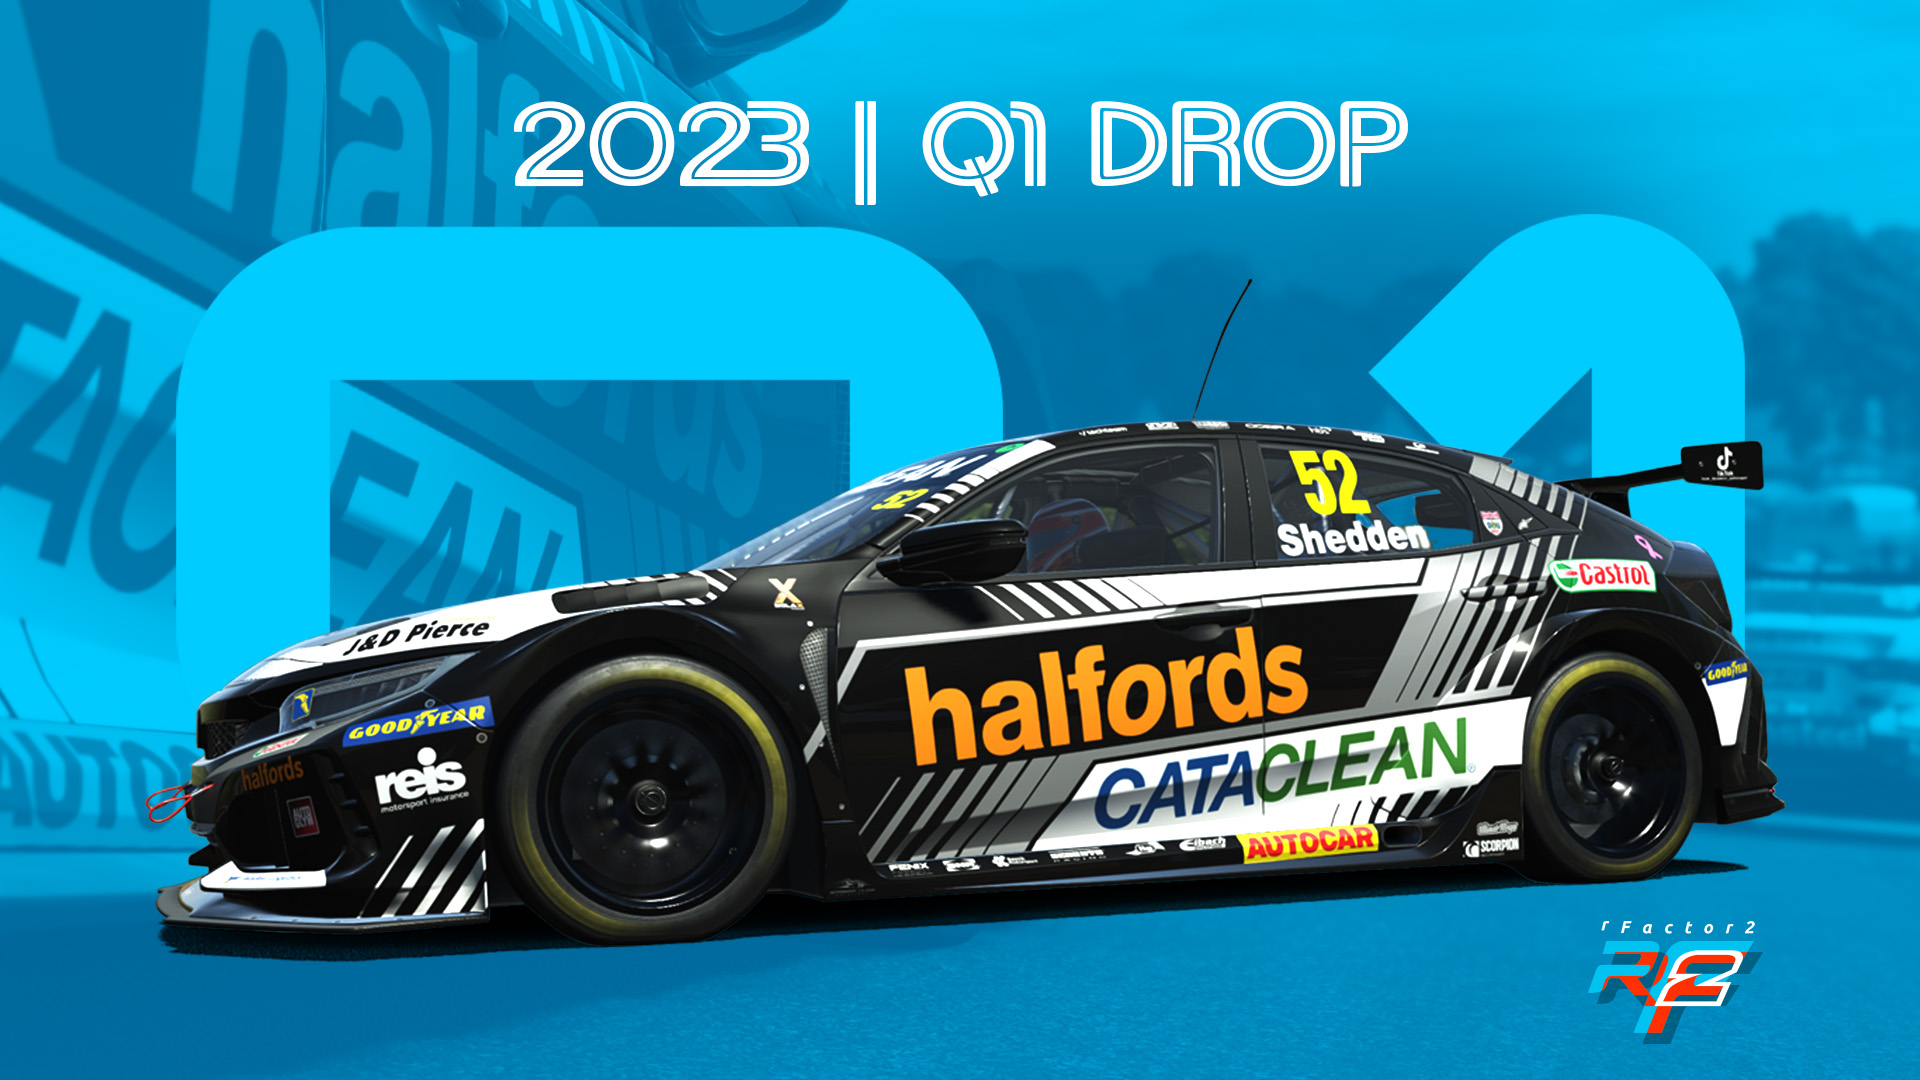 Motorsport Games - rFactor 2 - Q1 2023 update and content